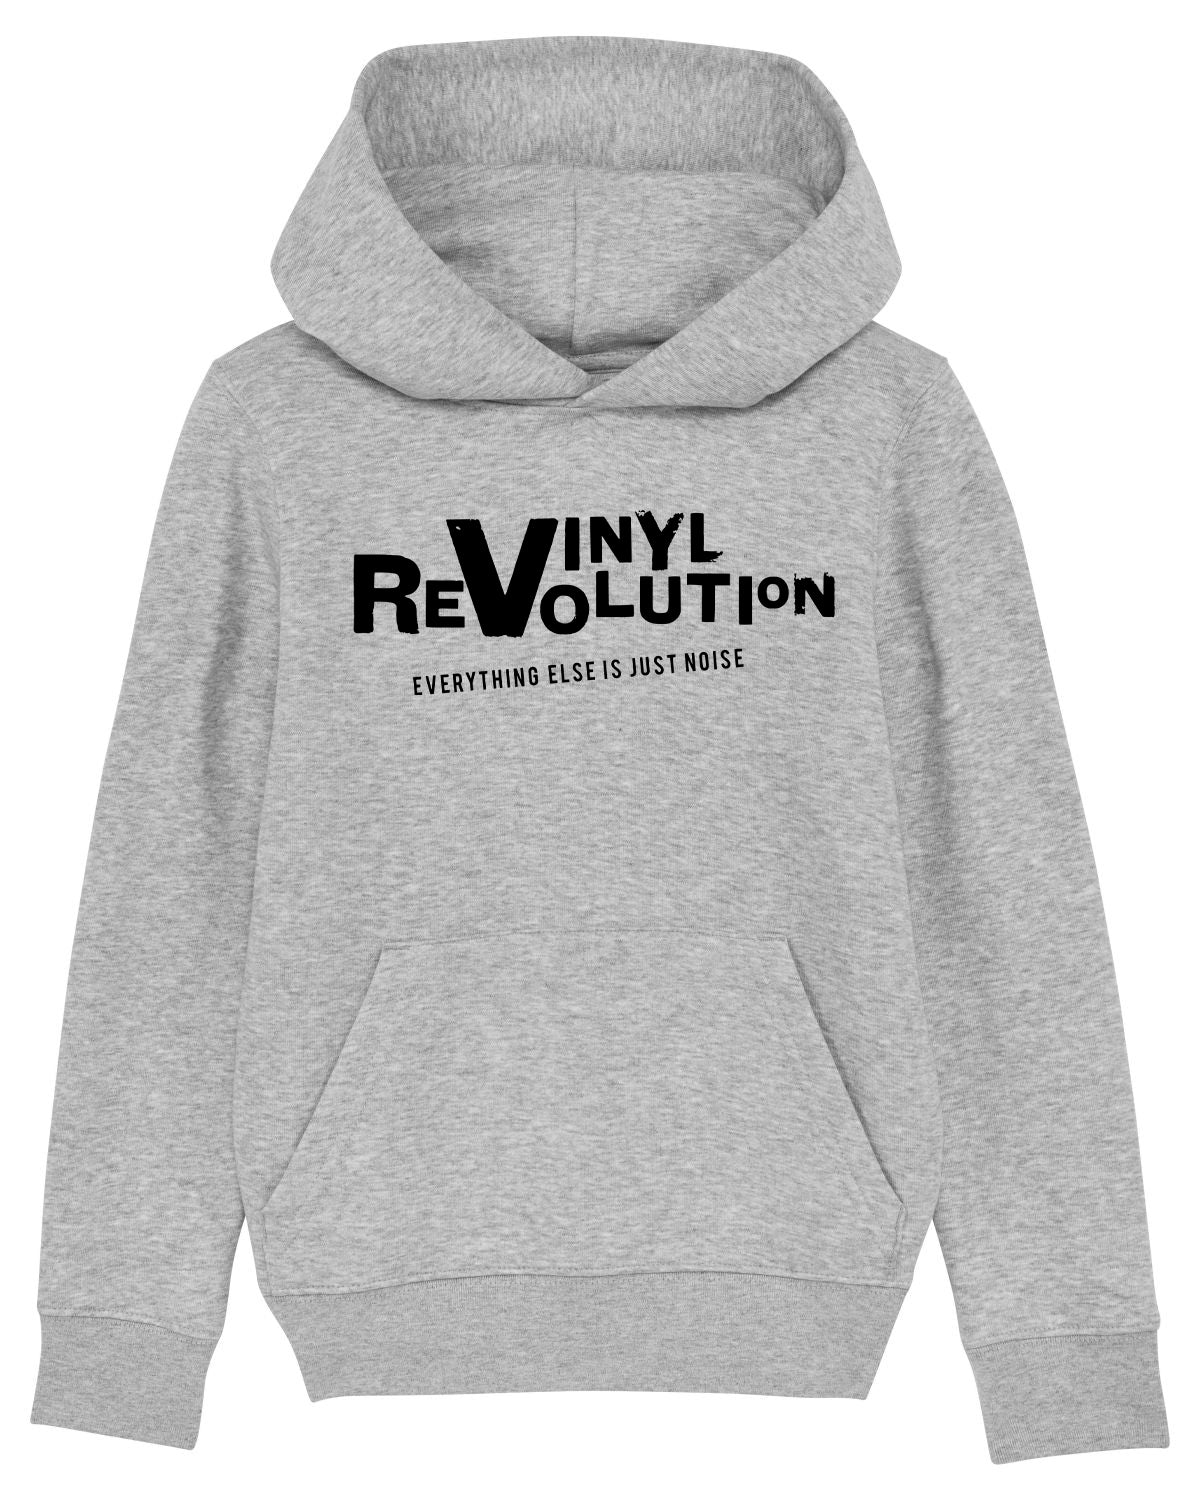 'Vinyl Revolution' Organic Kids Hoodie